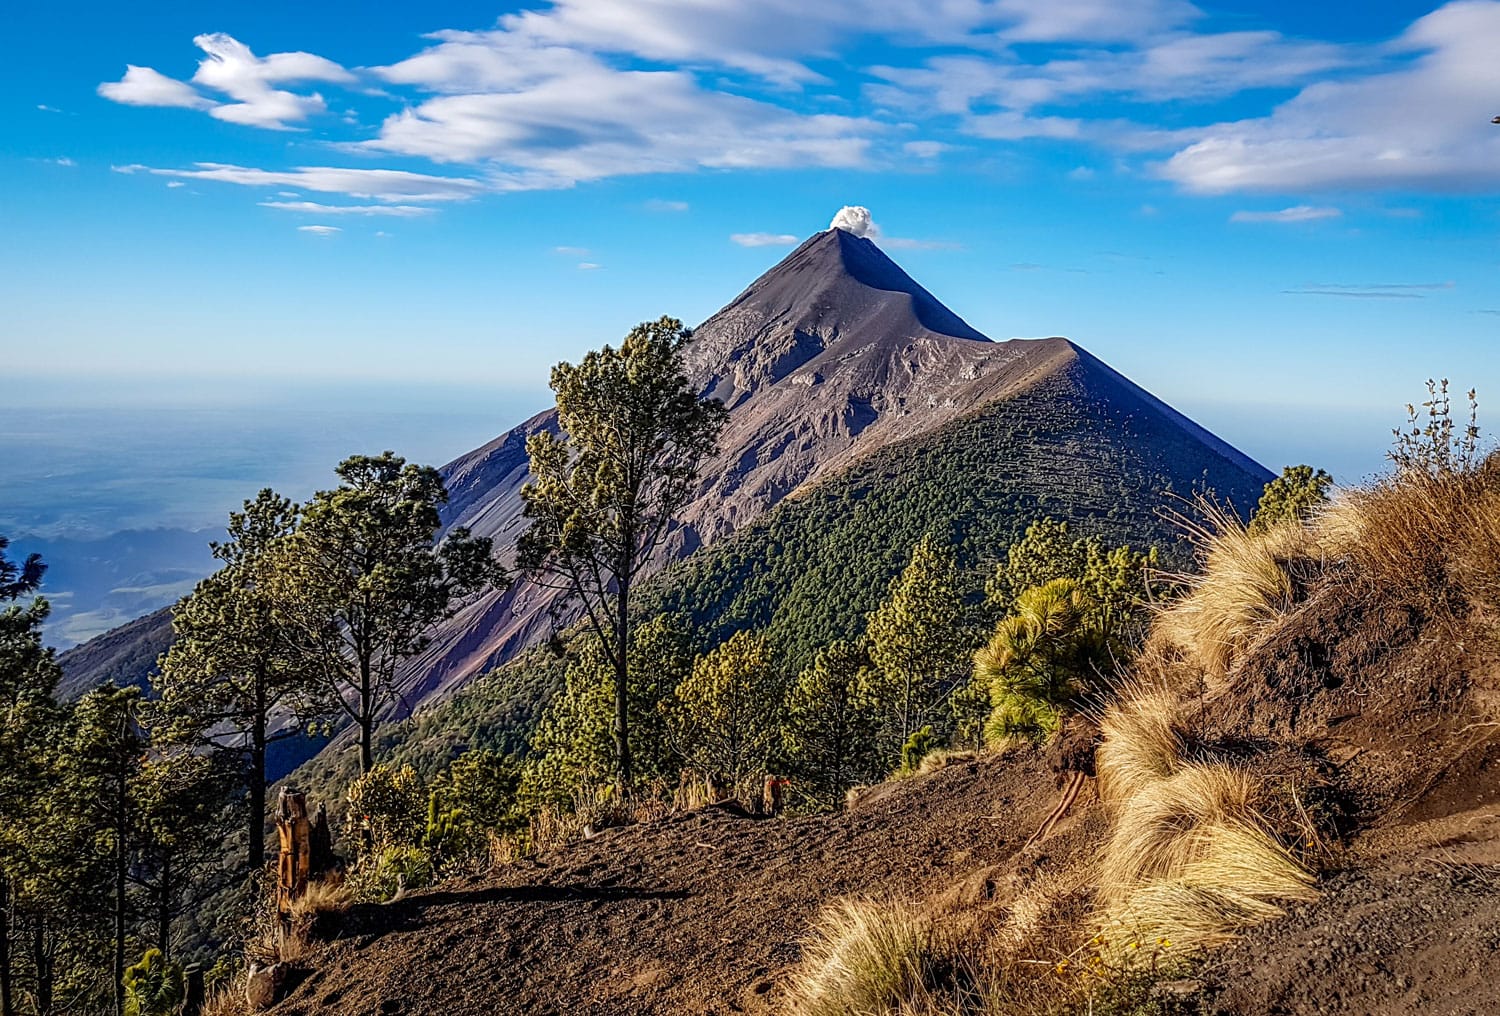 View of Fuego erupting , from Acatenango trekking trail in Guatemala